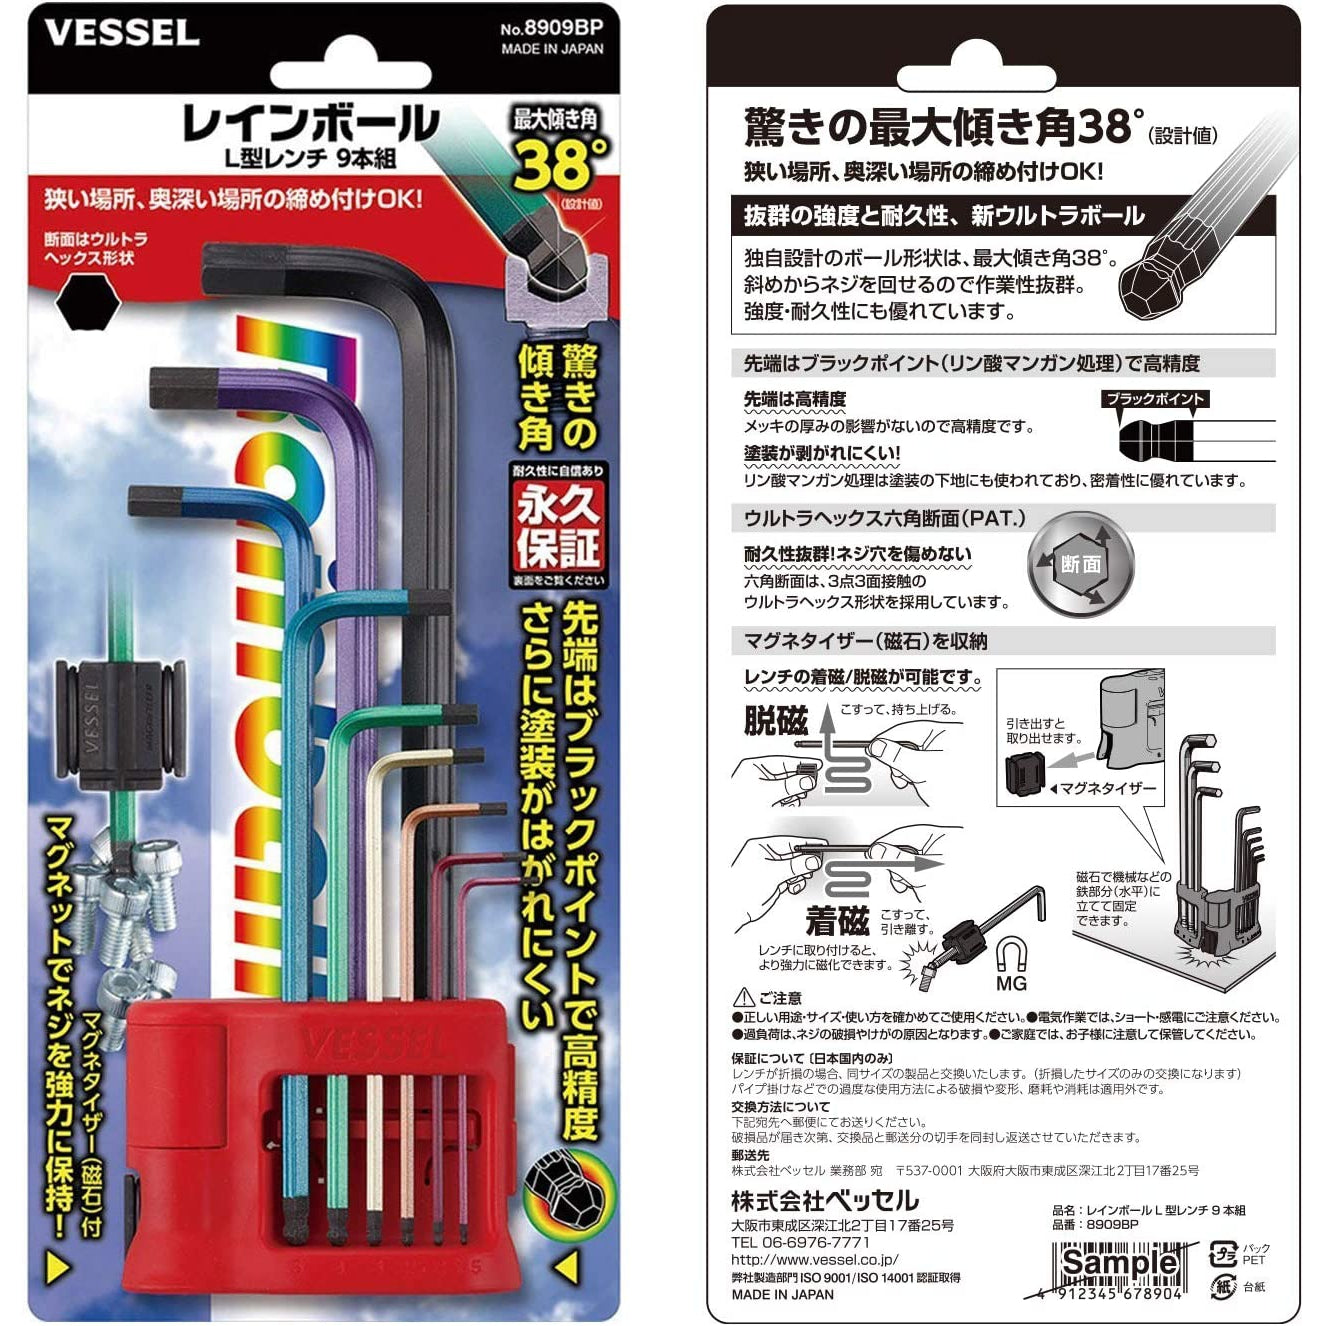 VESSEL 8909BP Rainbow L Type Wrench (Hex Key) 9 Set